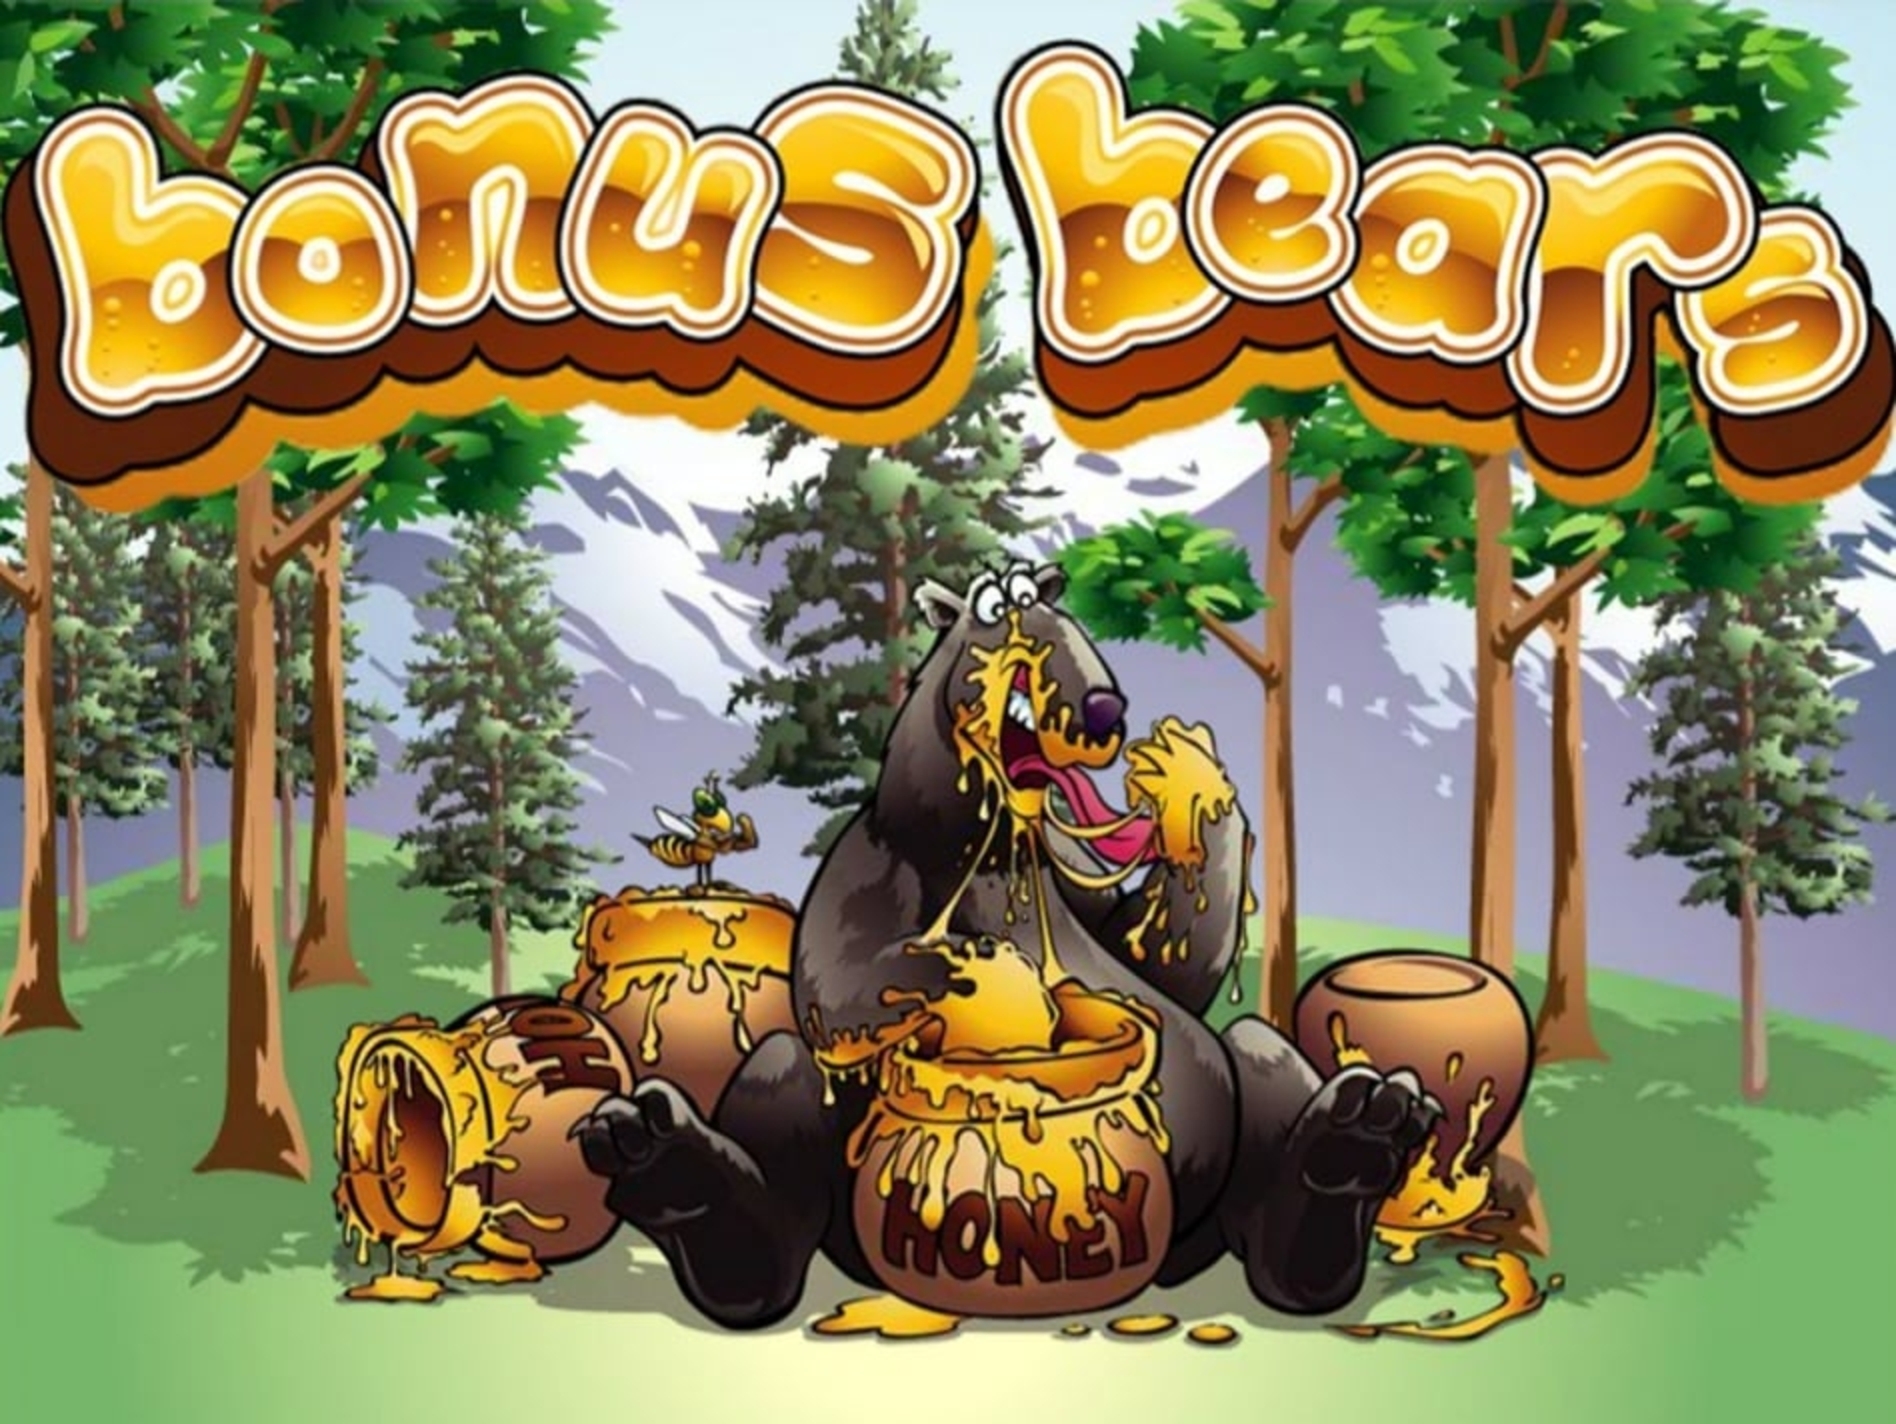 Bonus Bears demo